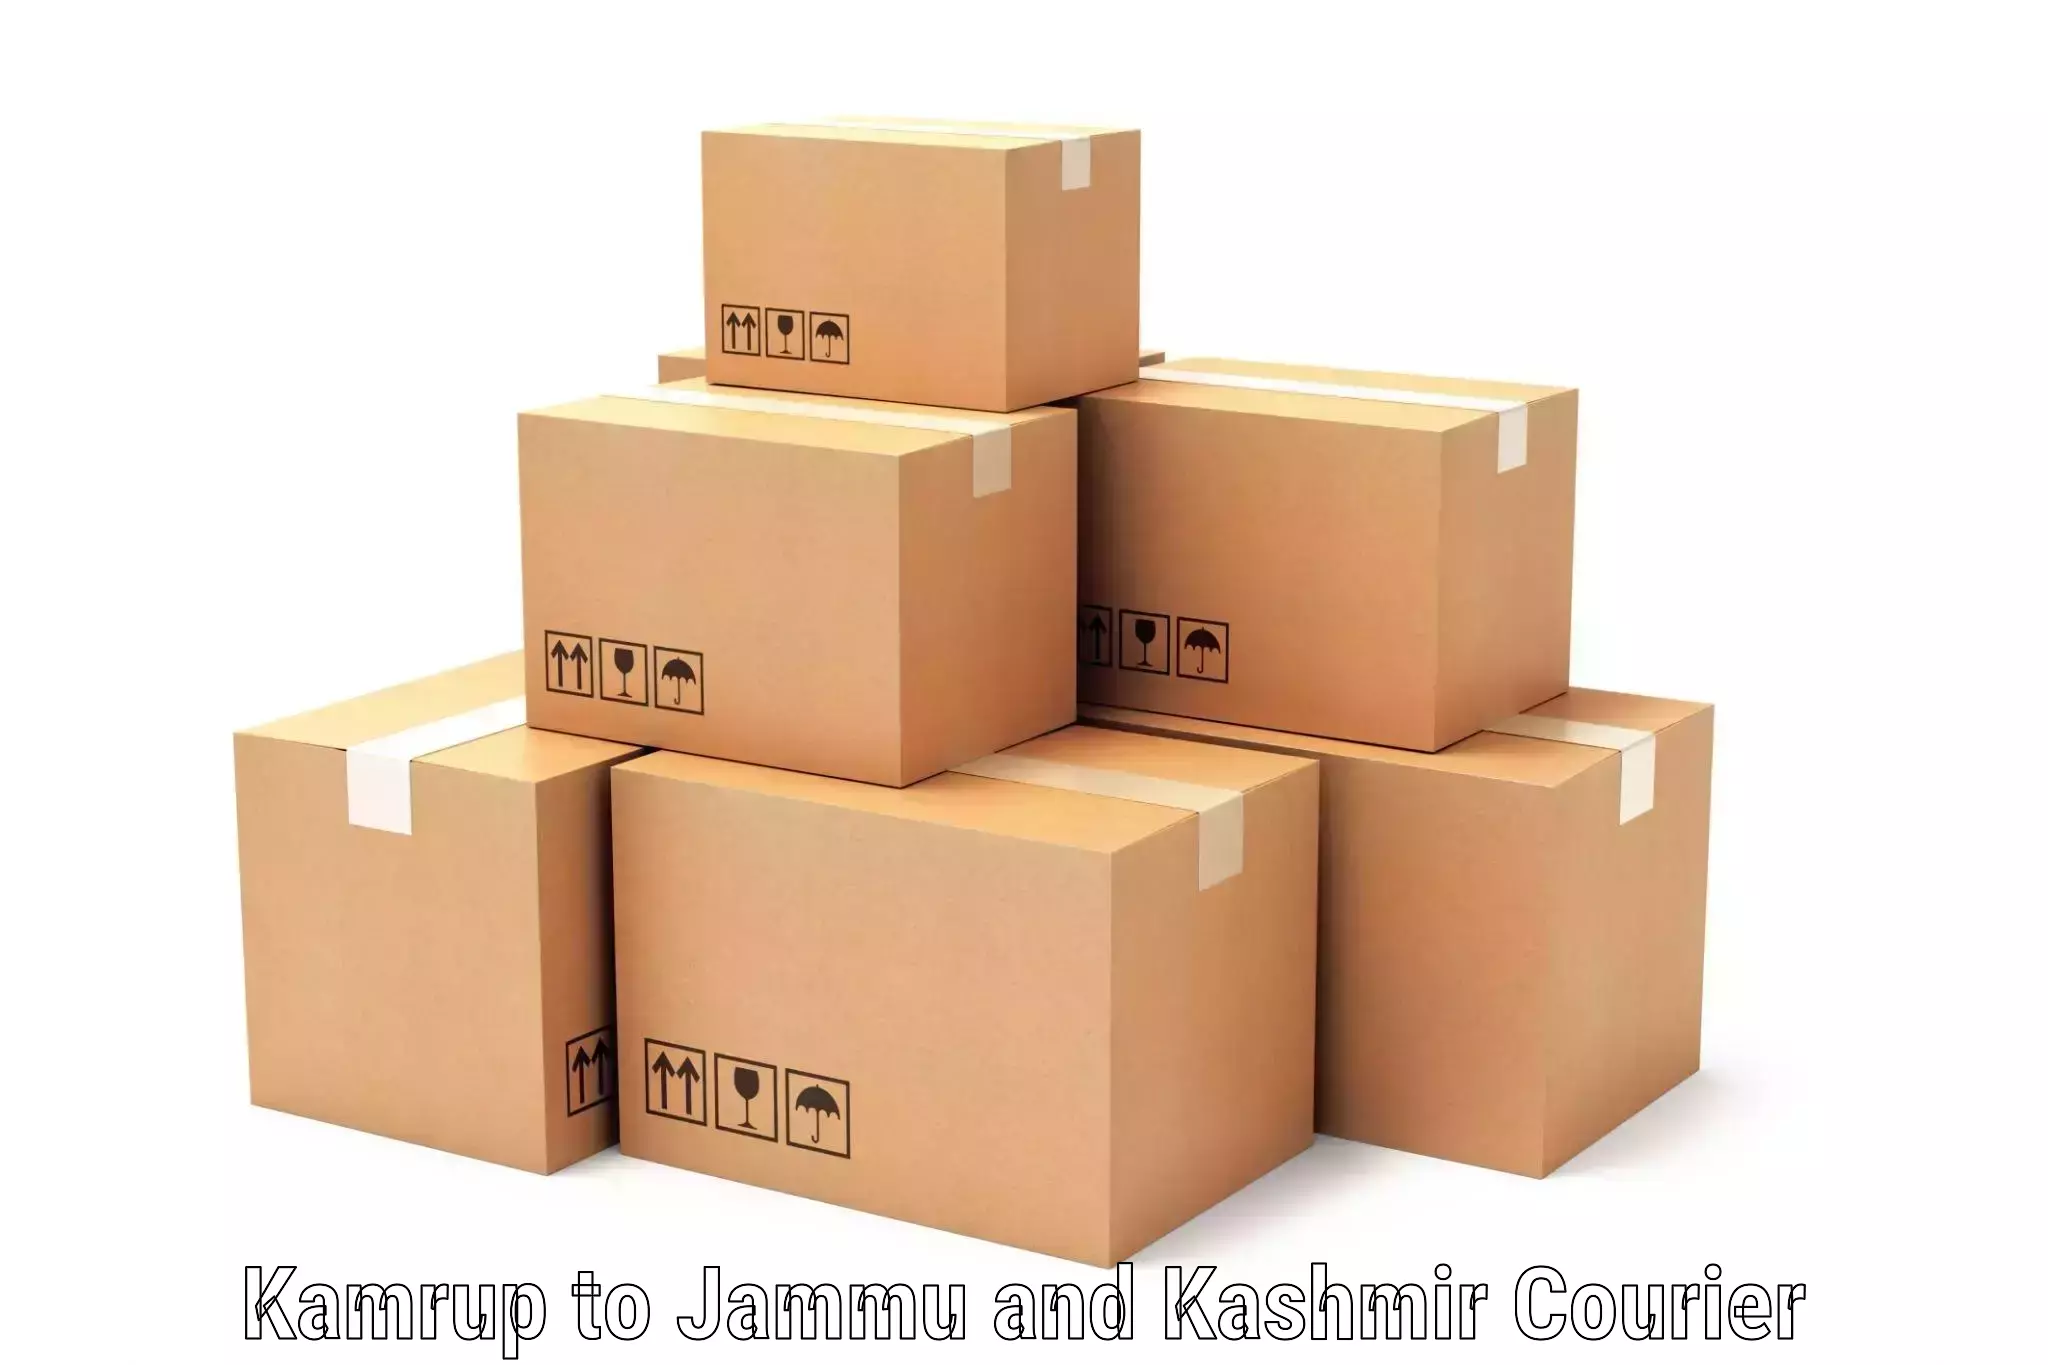 Logistics service provider Kamrup to Billawar